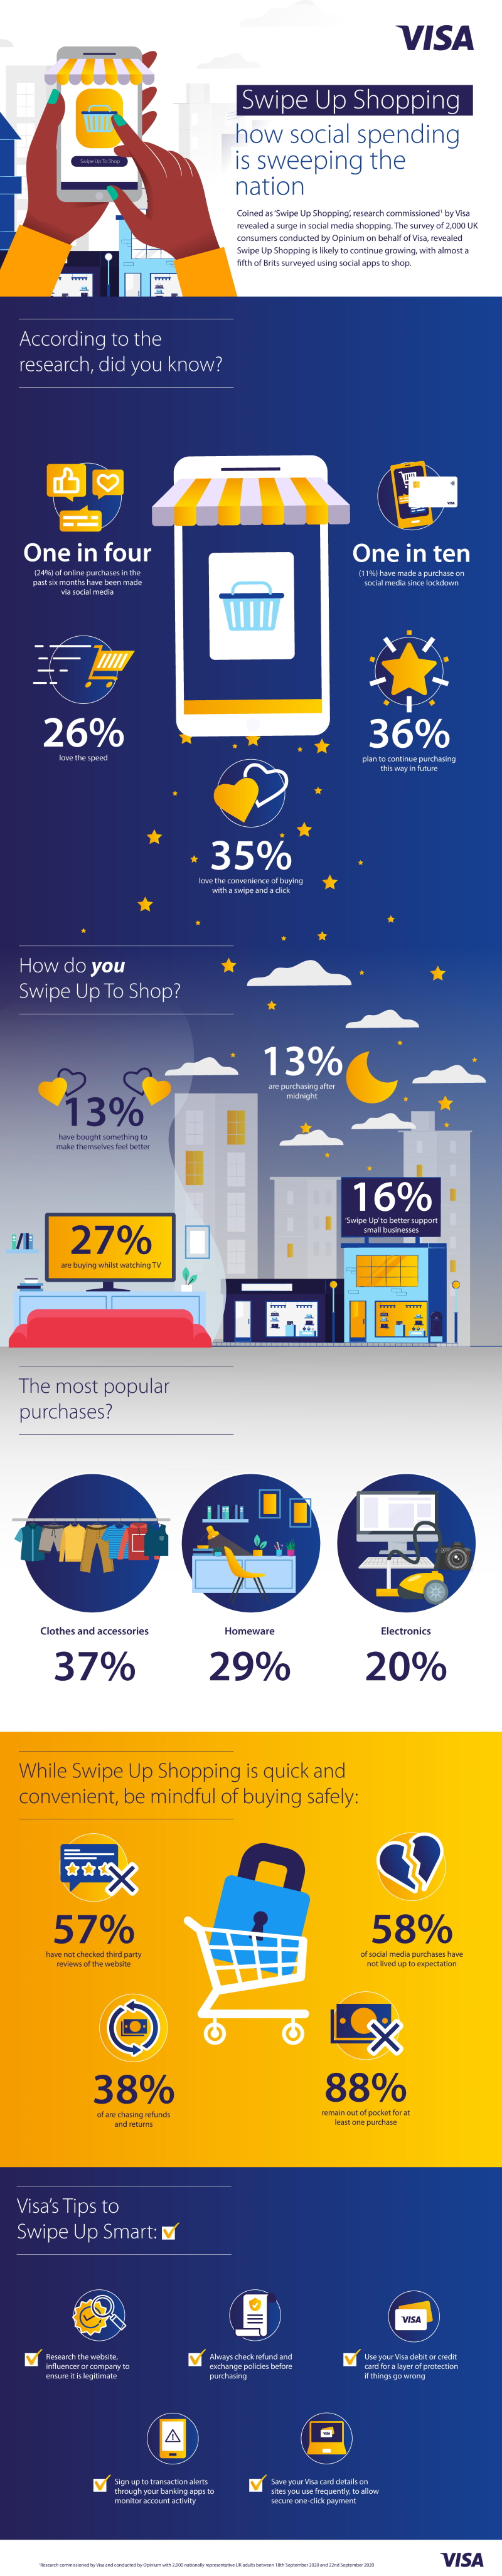 Swipe up shopping infographic